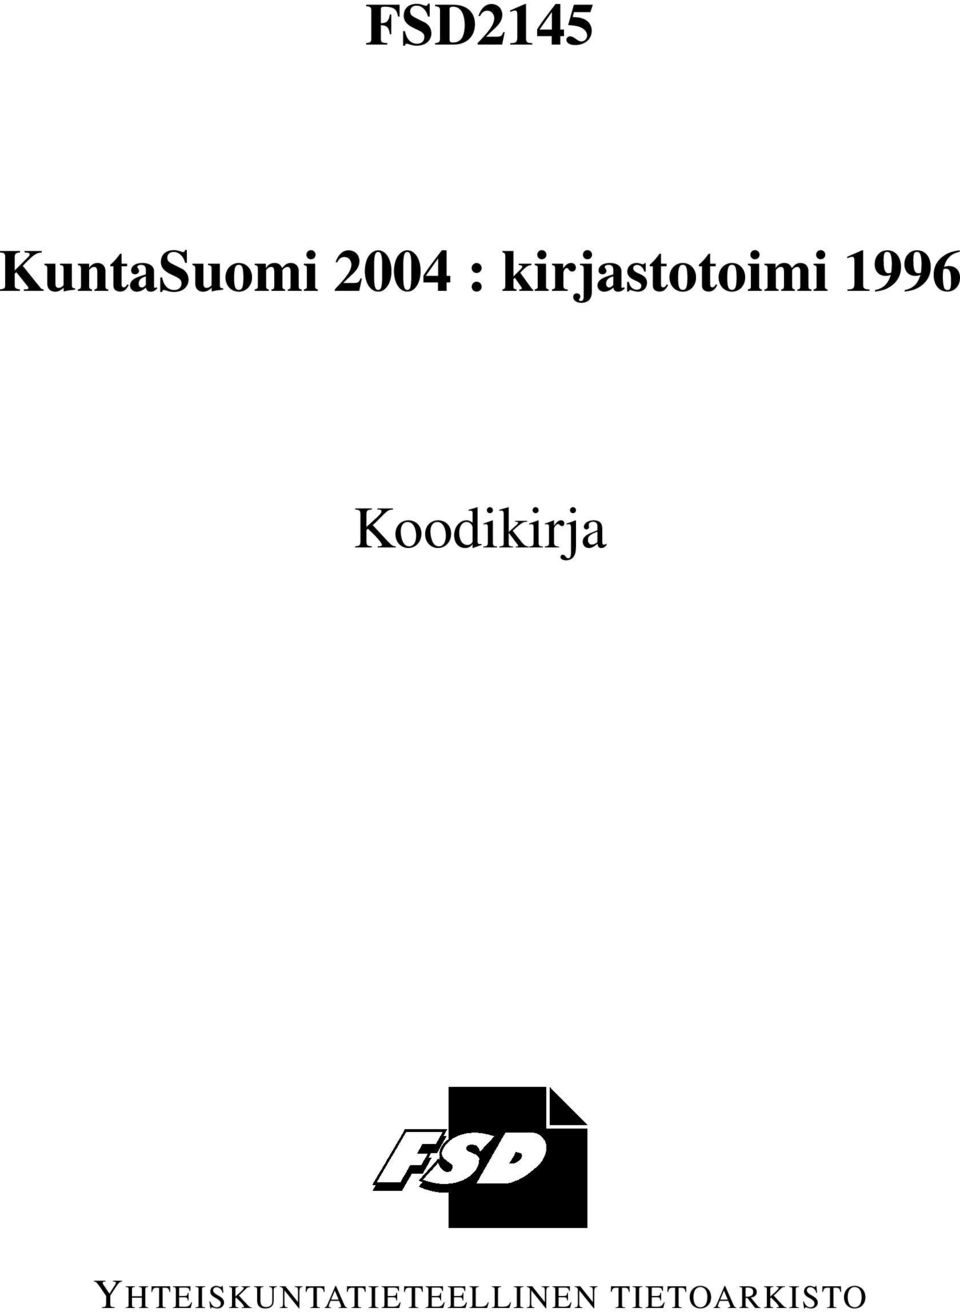 1996 Koodikirja